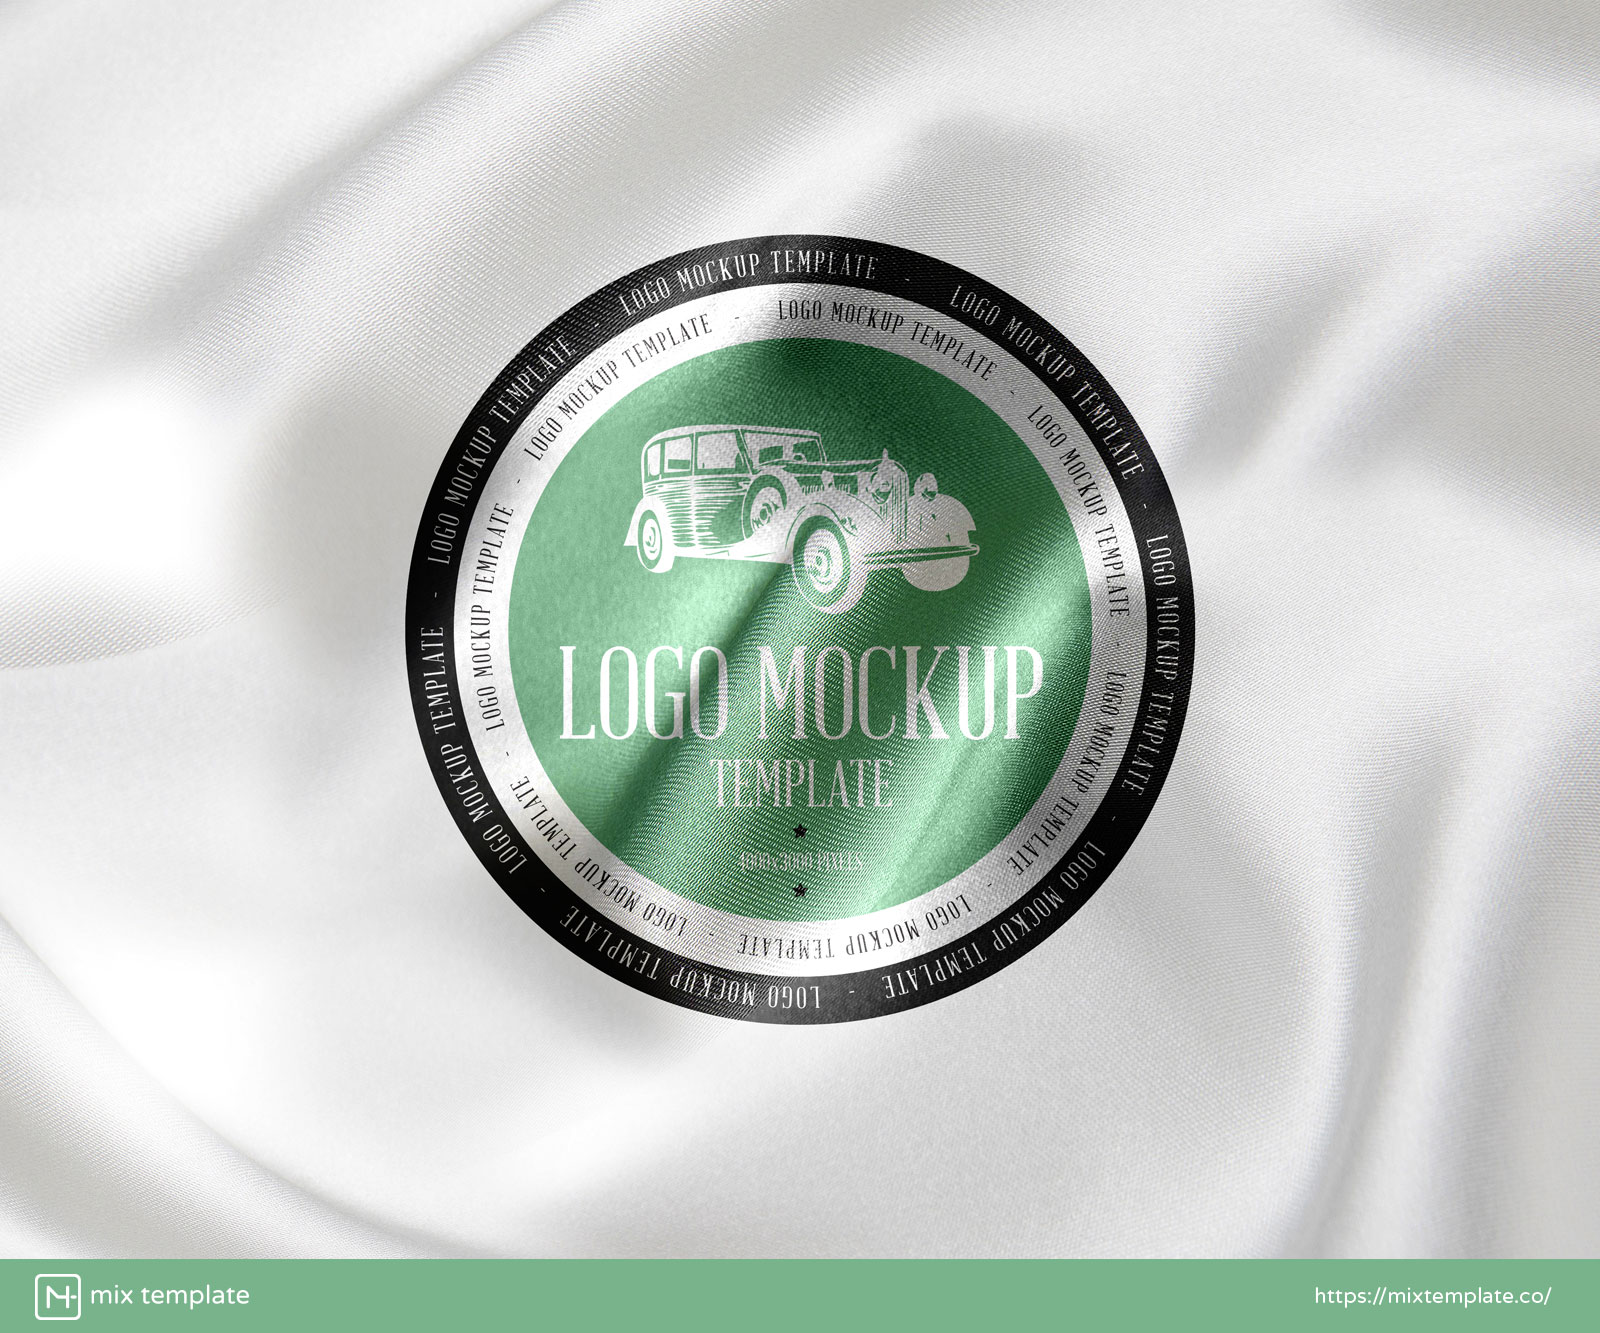 Free-Premium-Fabric-Logo-Mockup-Template-38